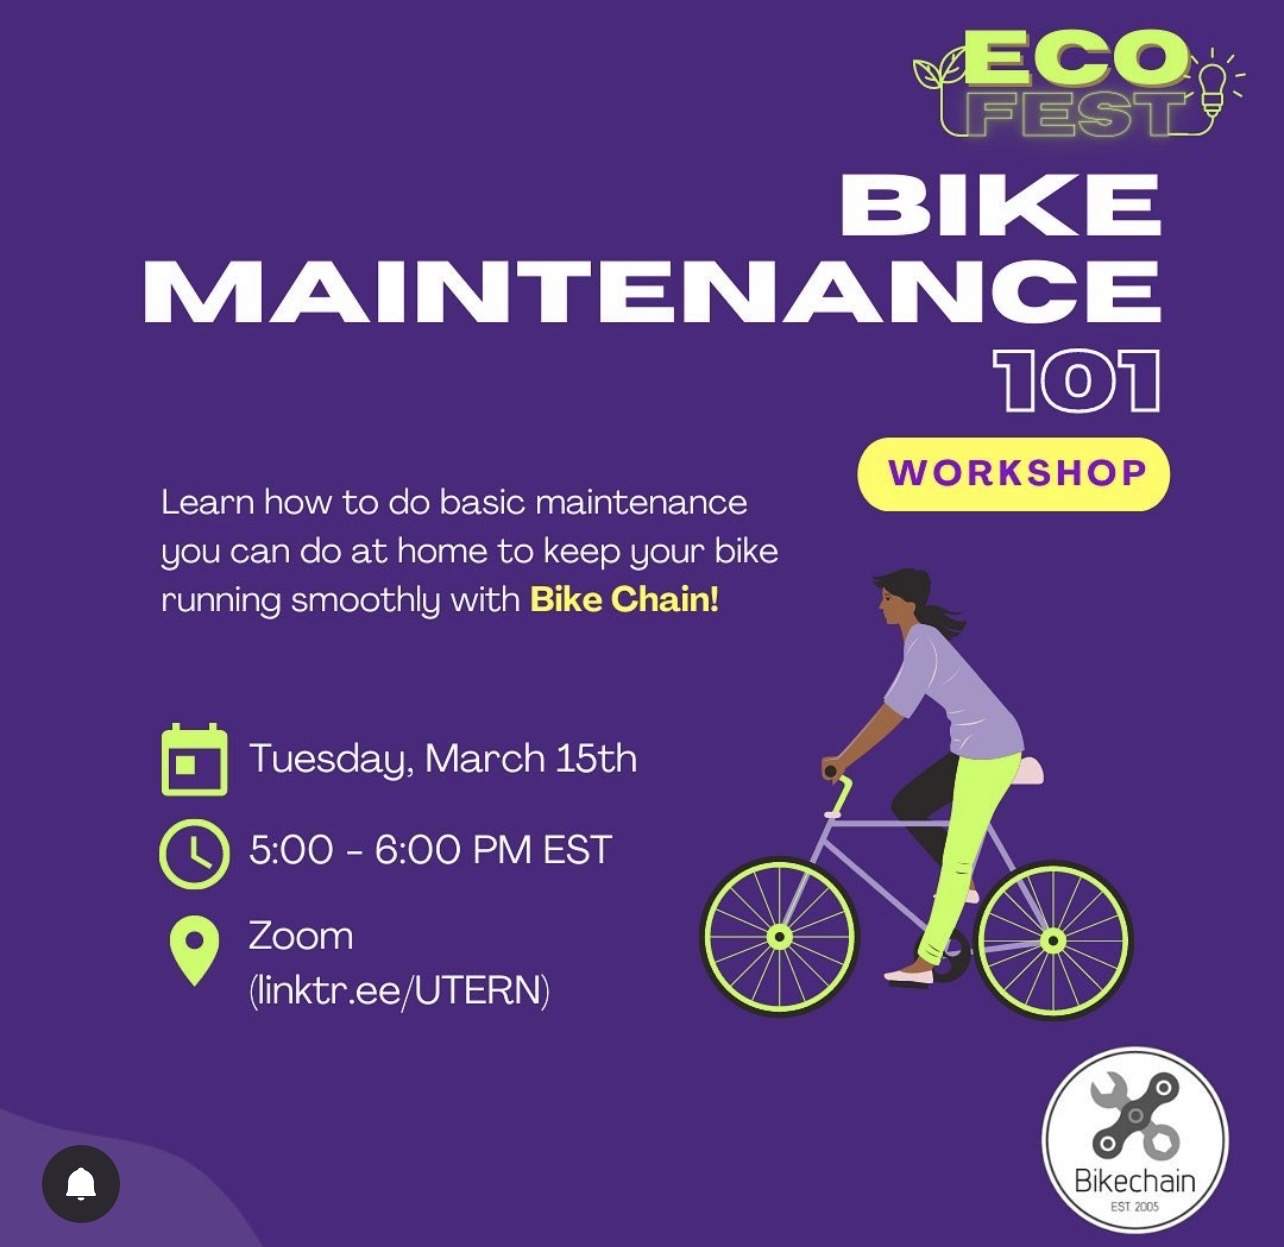 Showcase Image for EcoFest Bike Maintenance 101 Workshop